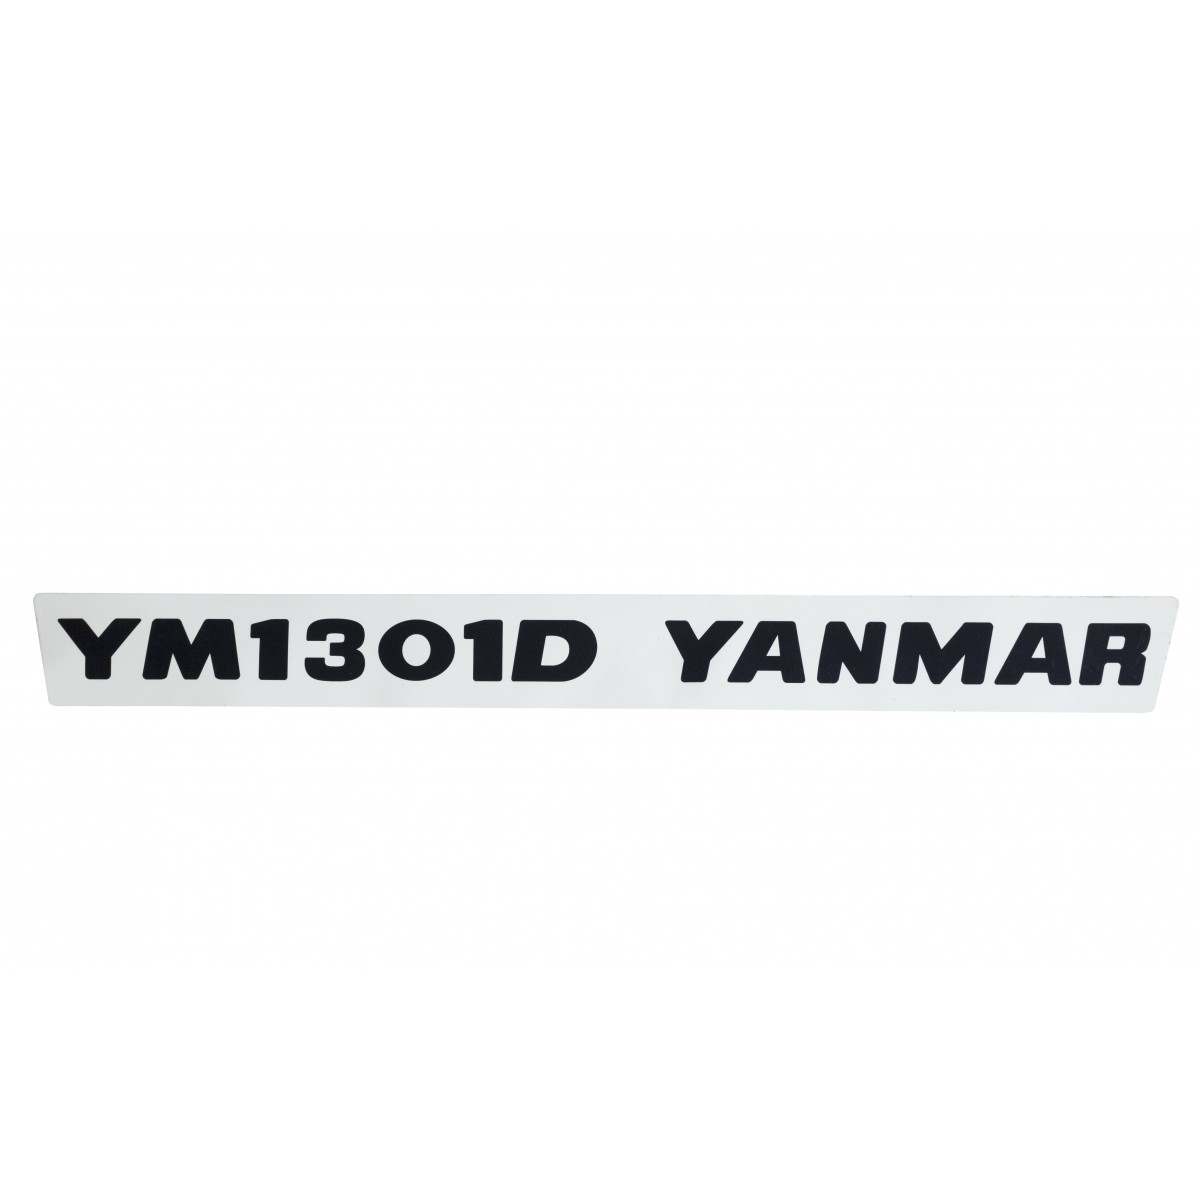 Autocollant Yanmar YM1301D